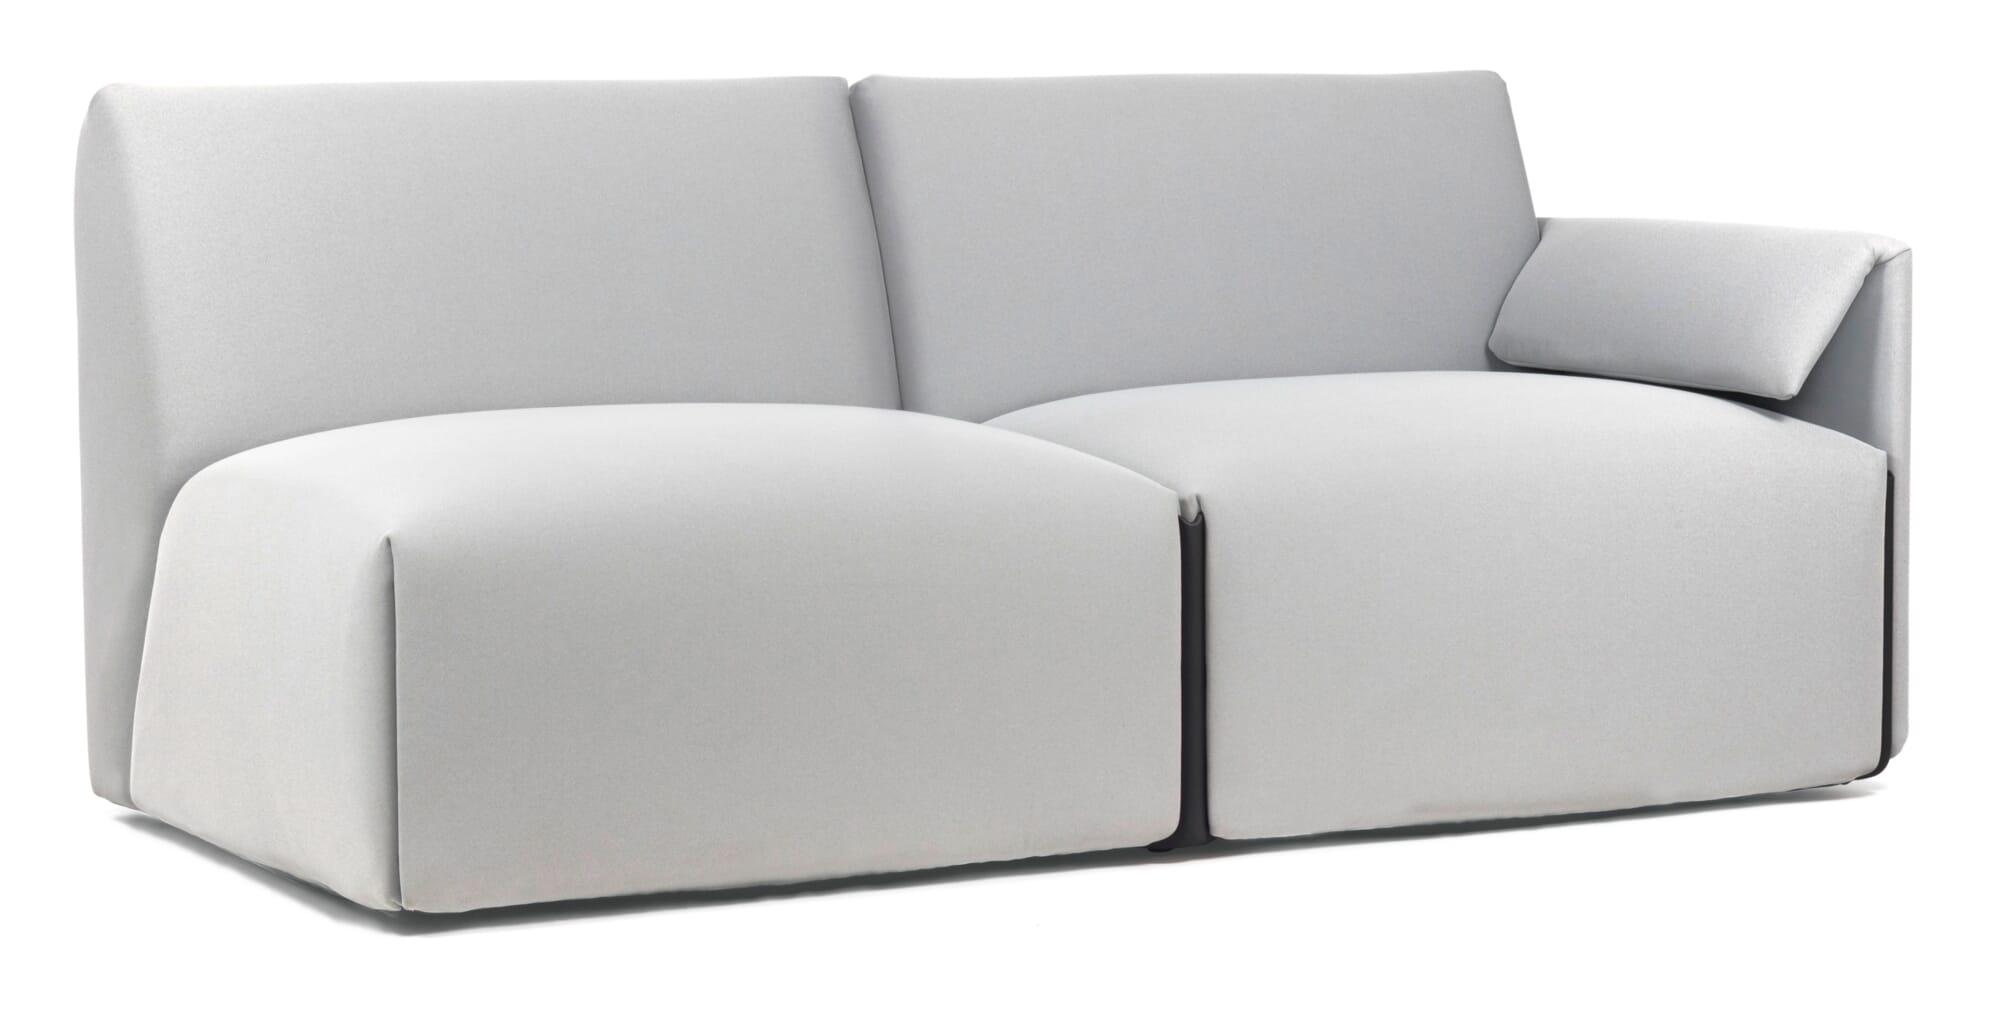 BAND POLSTER GURT Band Polster Sofa Stuhl MöBel Reparatur Elastische Couch  J9K7 EUR 29,74 - PicClick DE